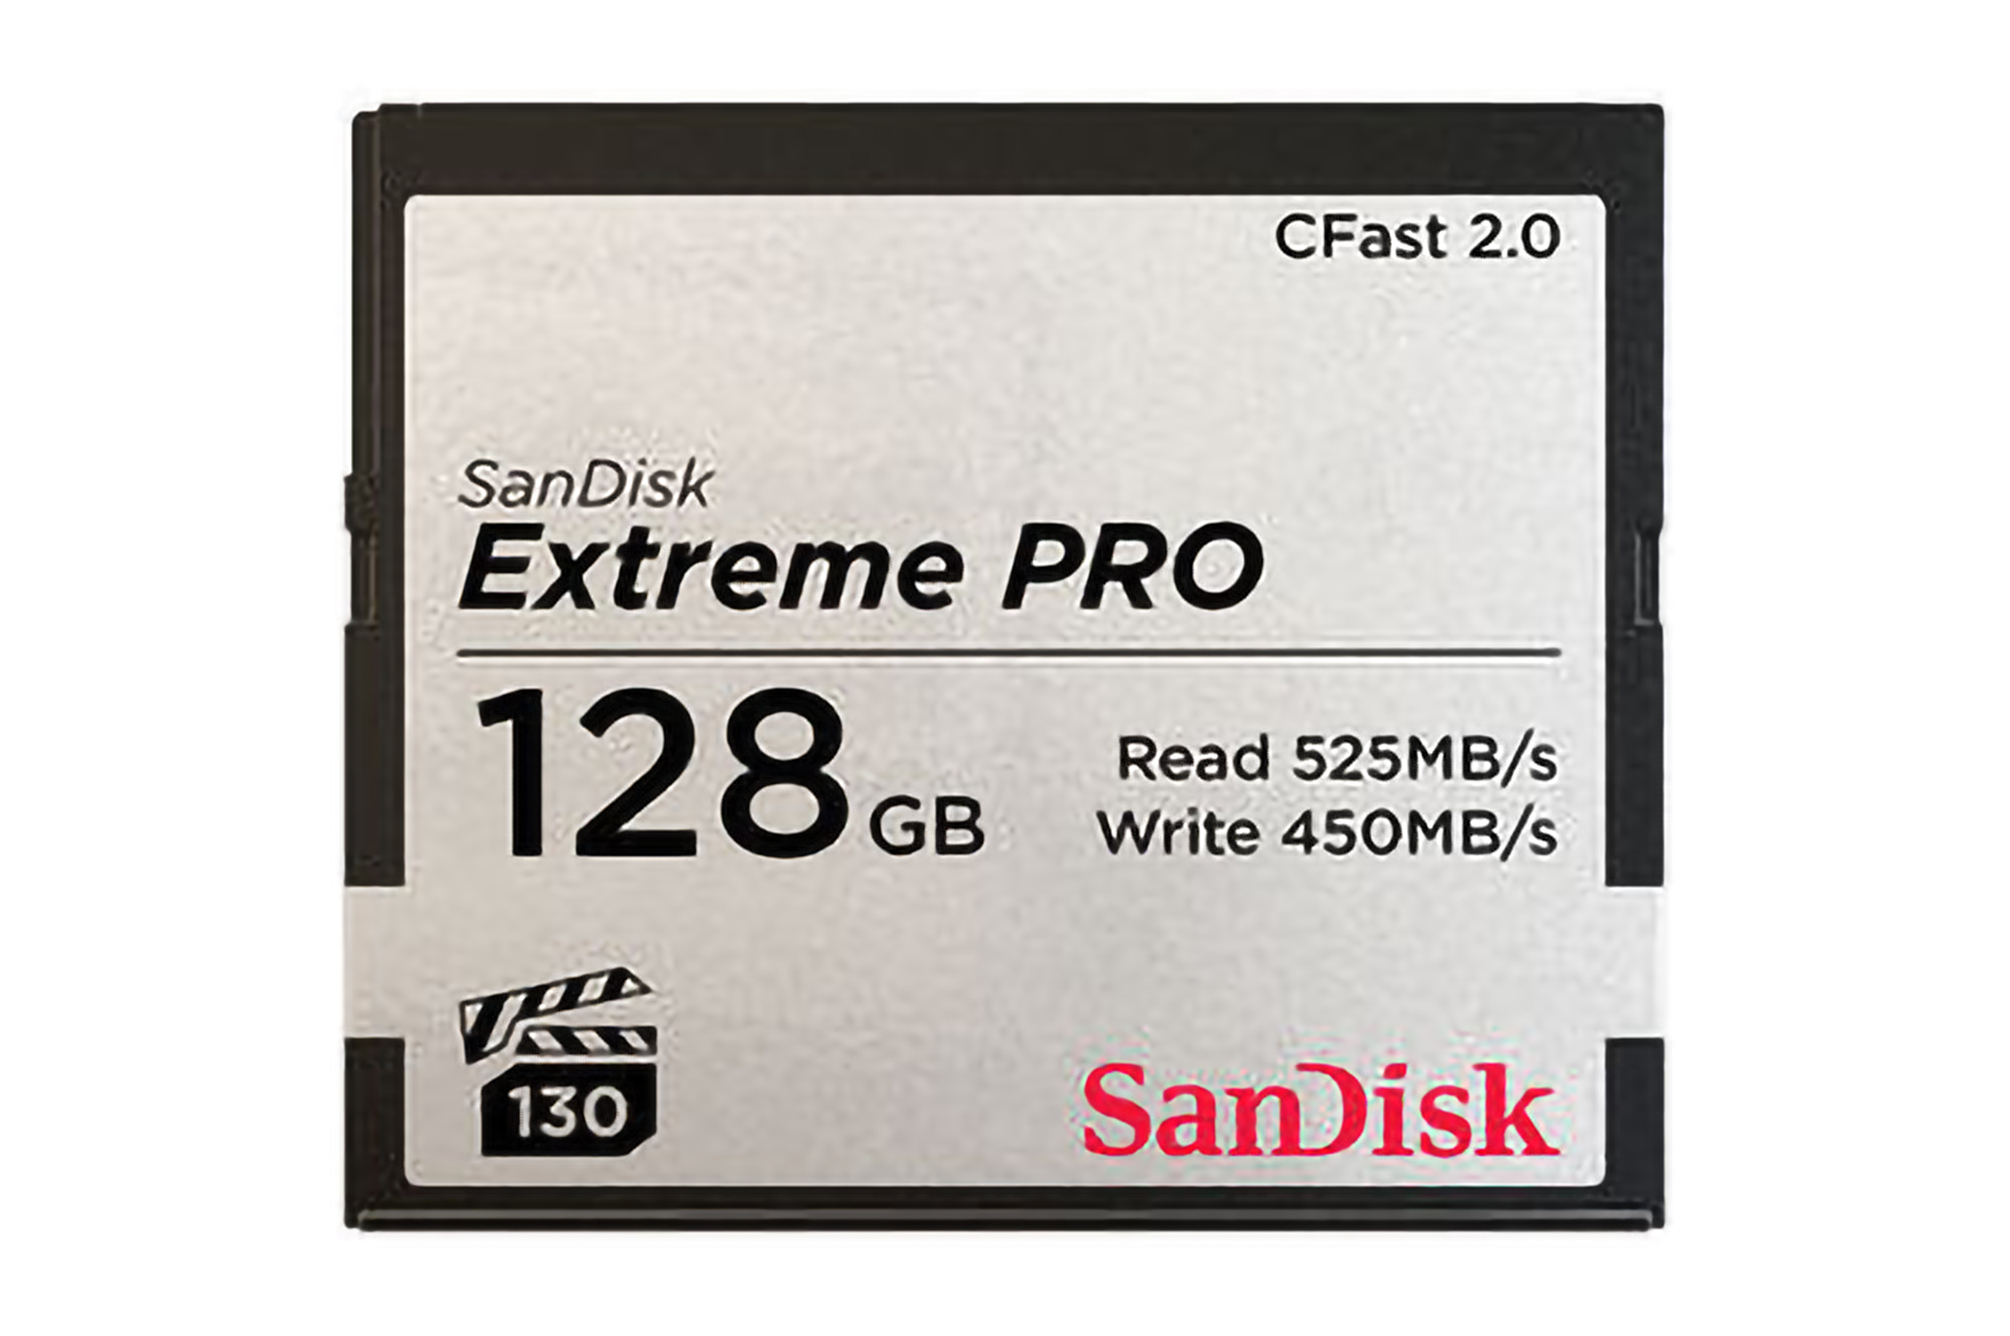 SanDisk CFast 2.0 Extreme Pro 128GB